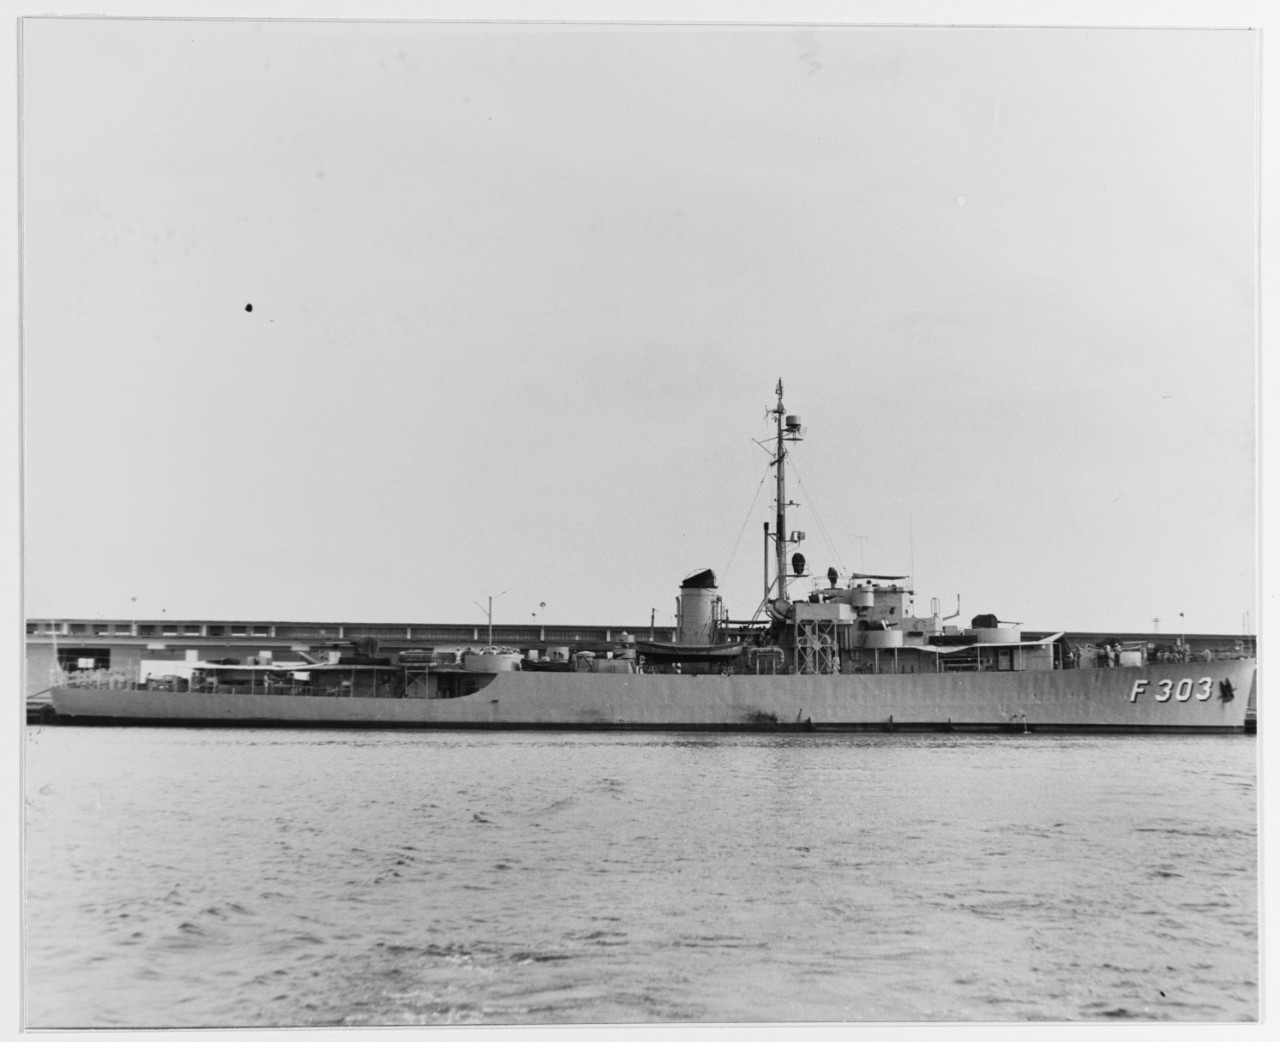 MAXIMO GOMEZ (Cuban frigate, 1944)